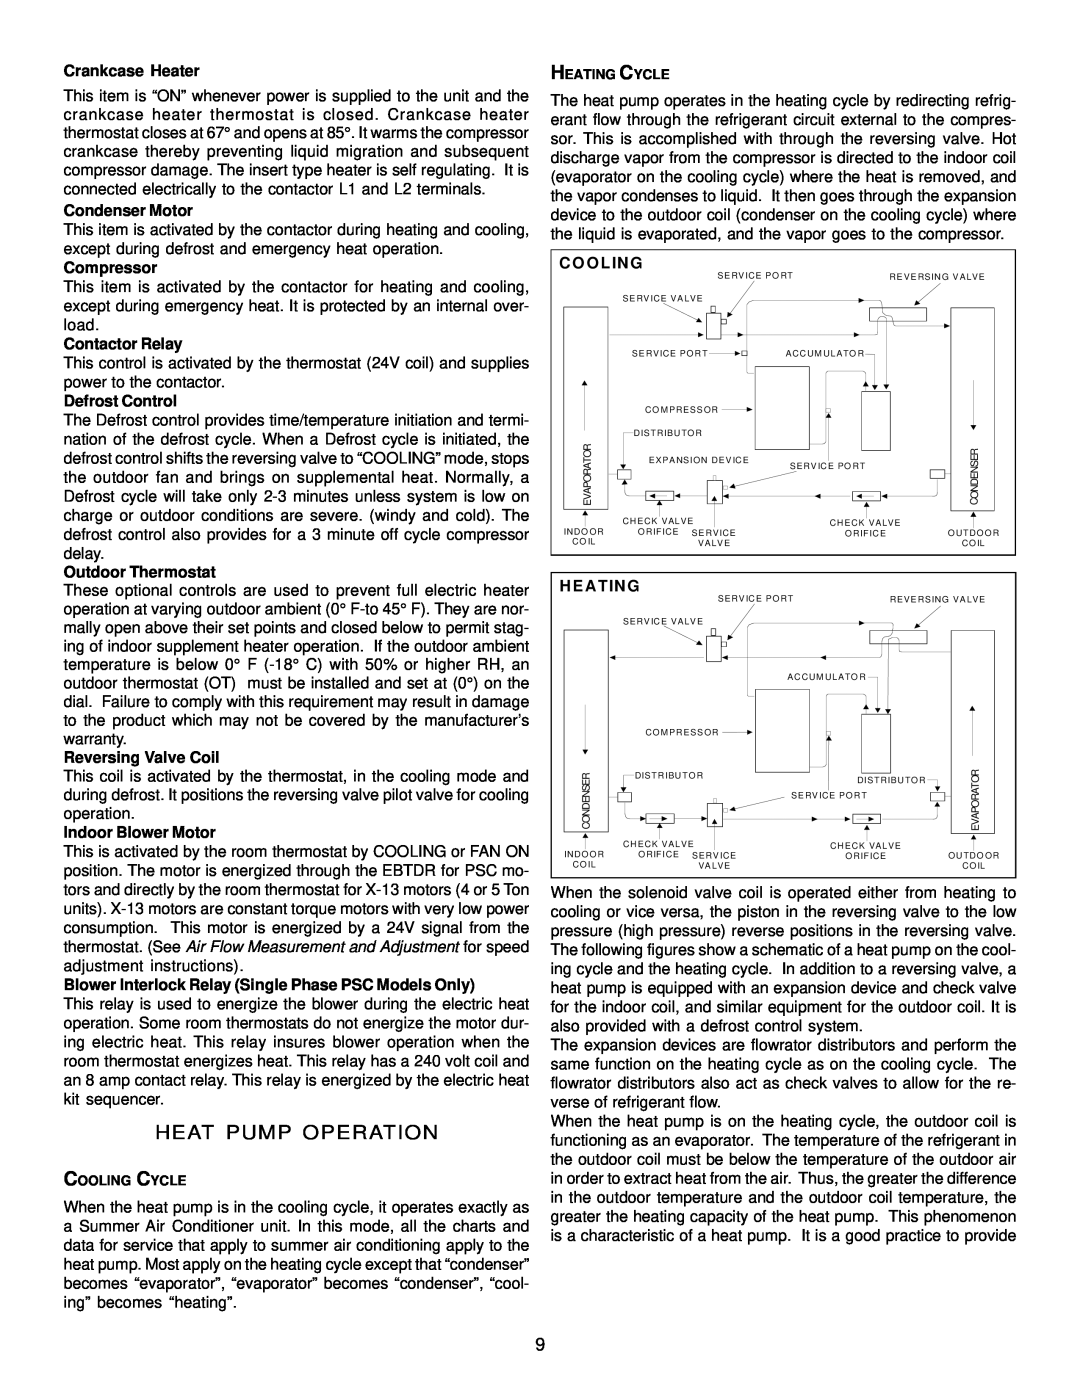 Goodman Mfg IO - 395 specifications Heat Pump Operation 